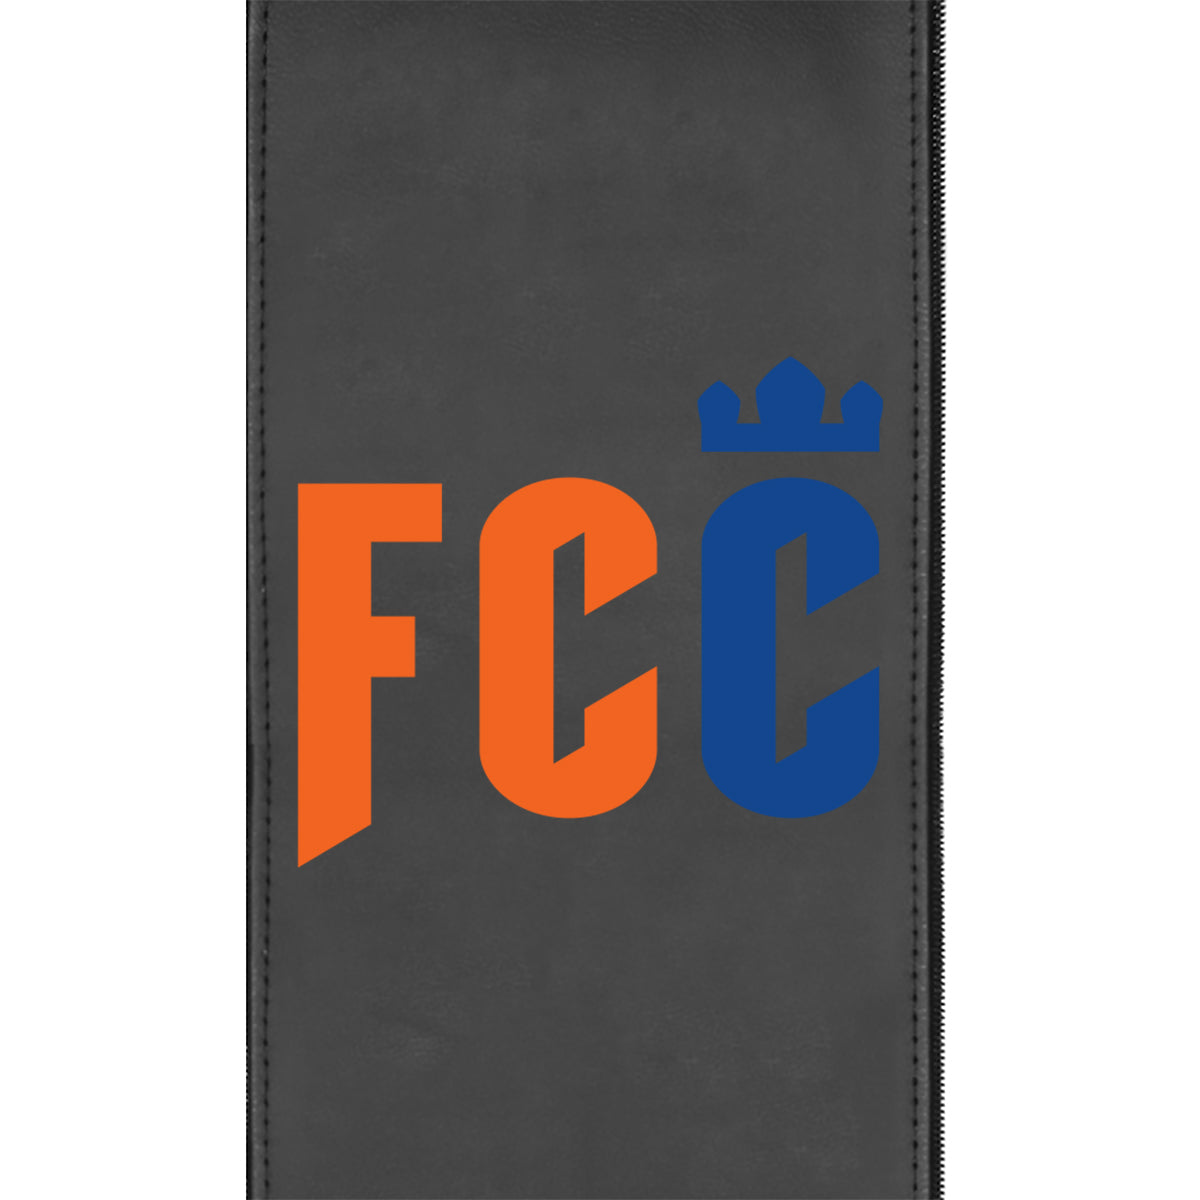 Stealth Recliner with FC Cincinnati Wordmark Logo